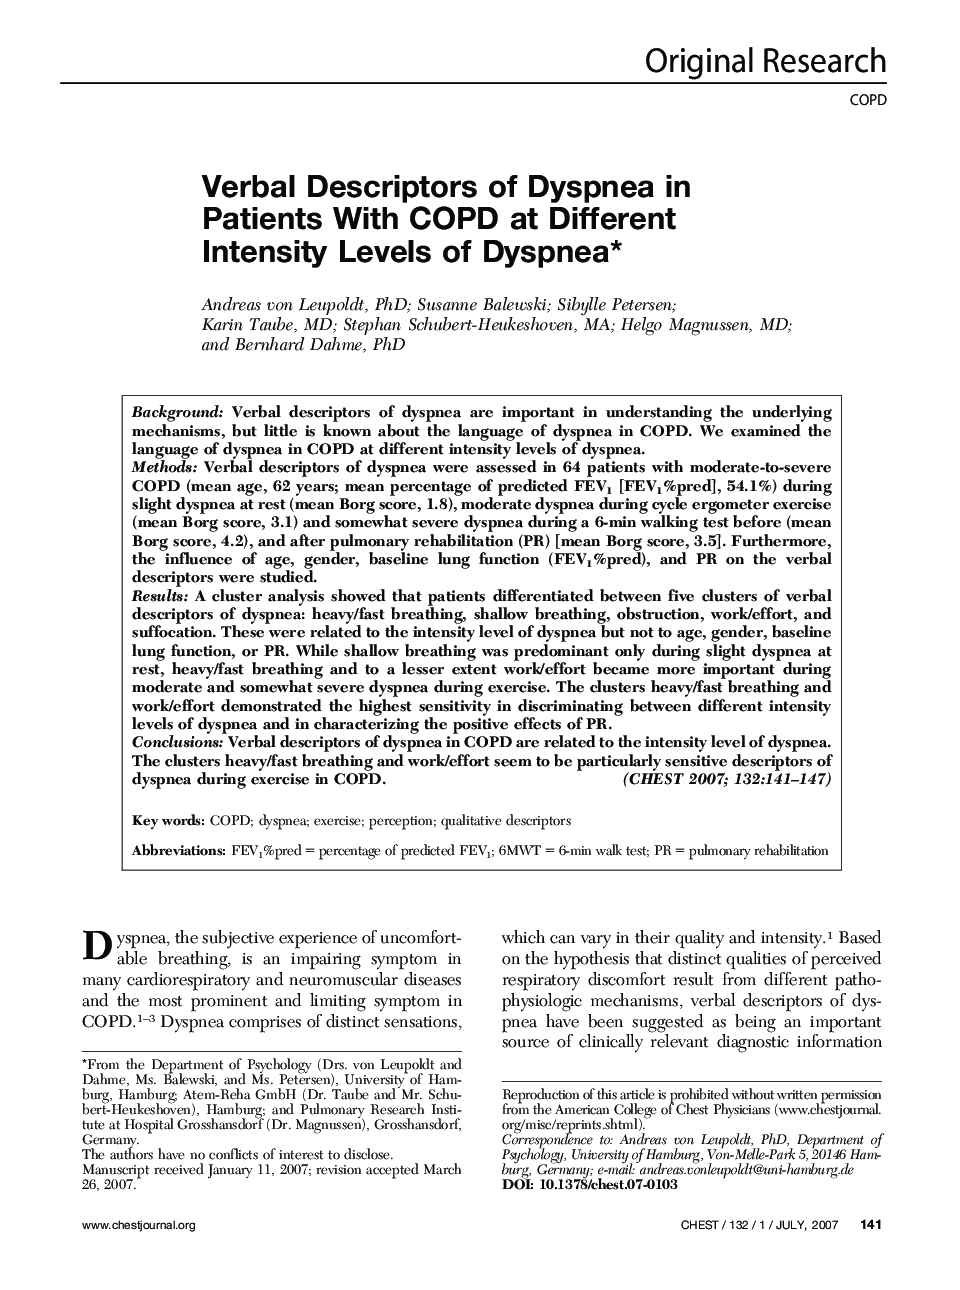 Verbal Descriptors of Dyspnea in Patients With COPD at Different Intensity Levels of Dyspnea 